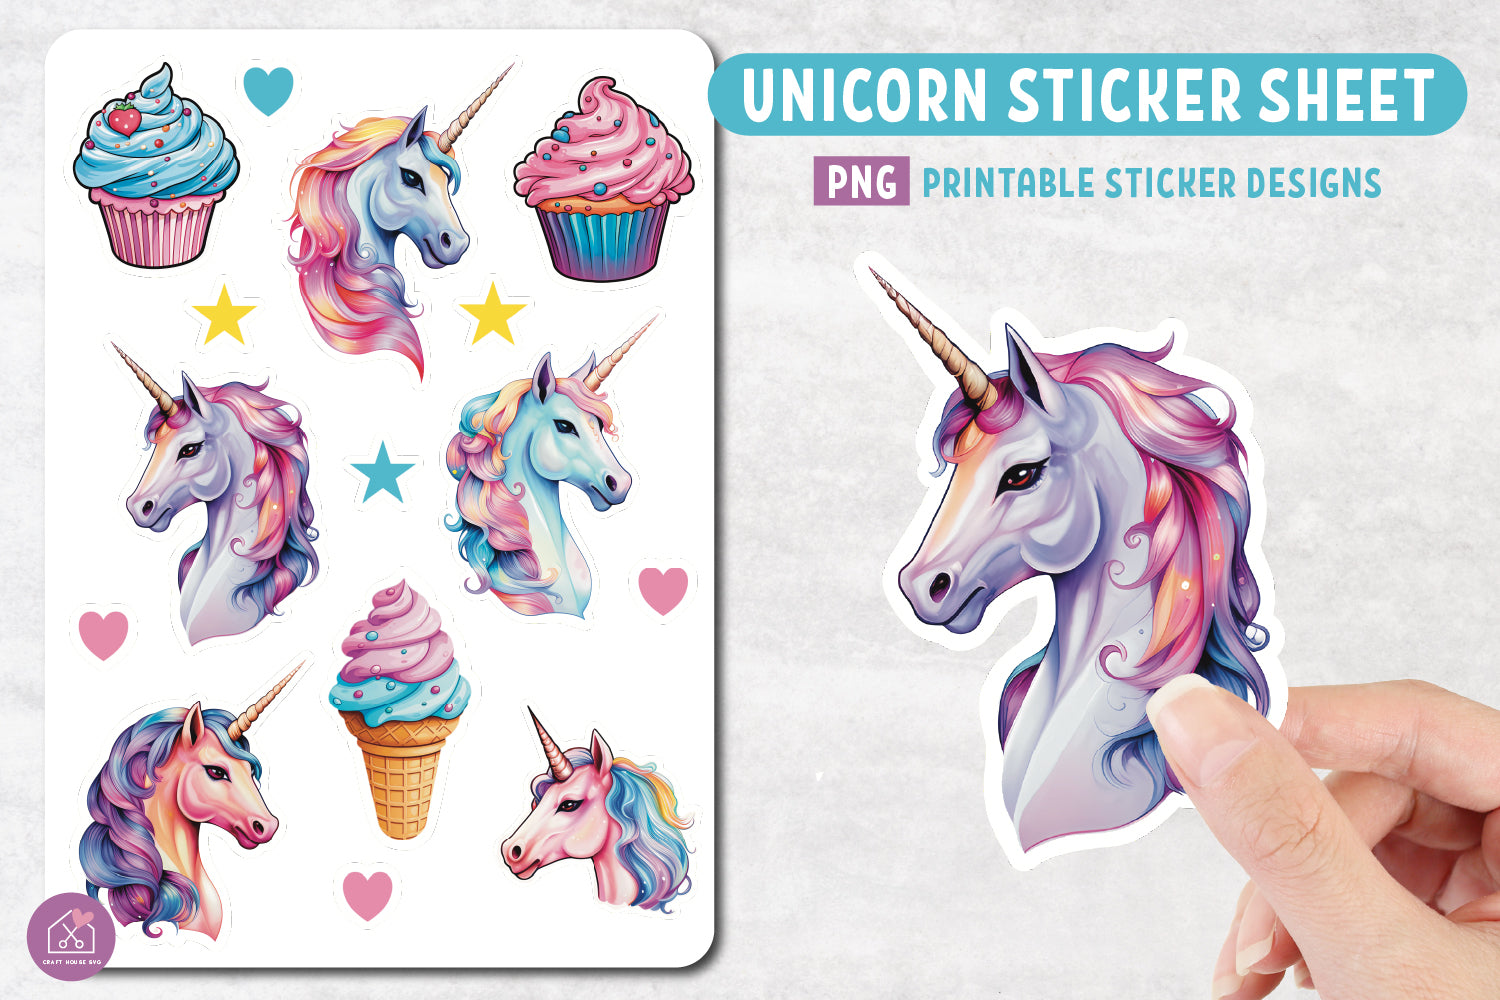 Unicorn Sticker Sheet PNG Print and Cut Sticker Designs